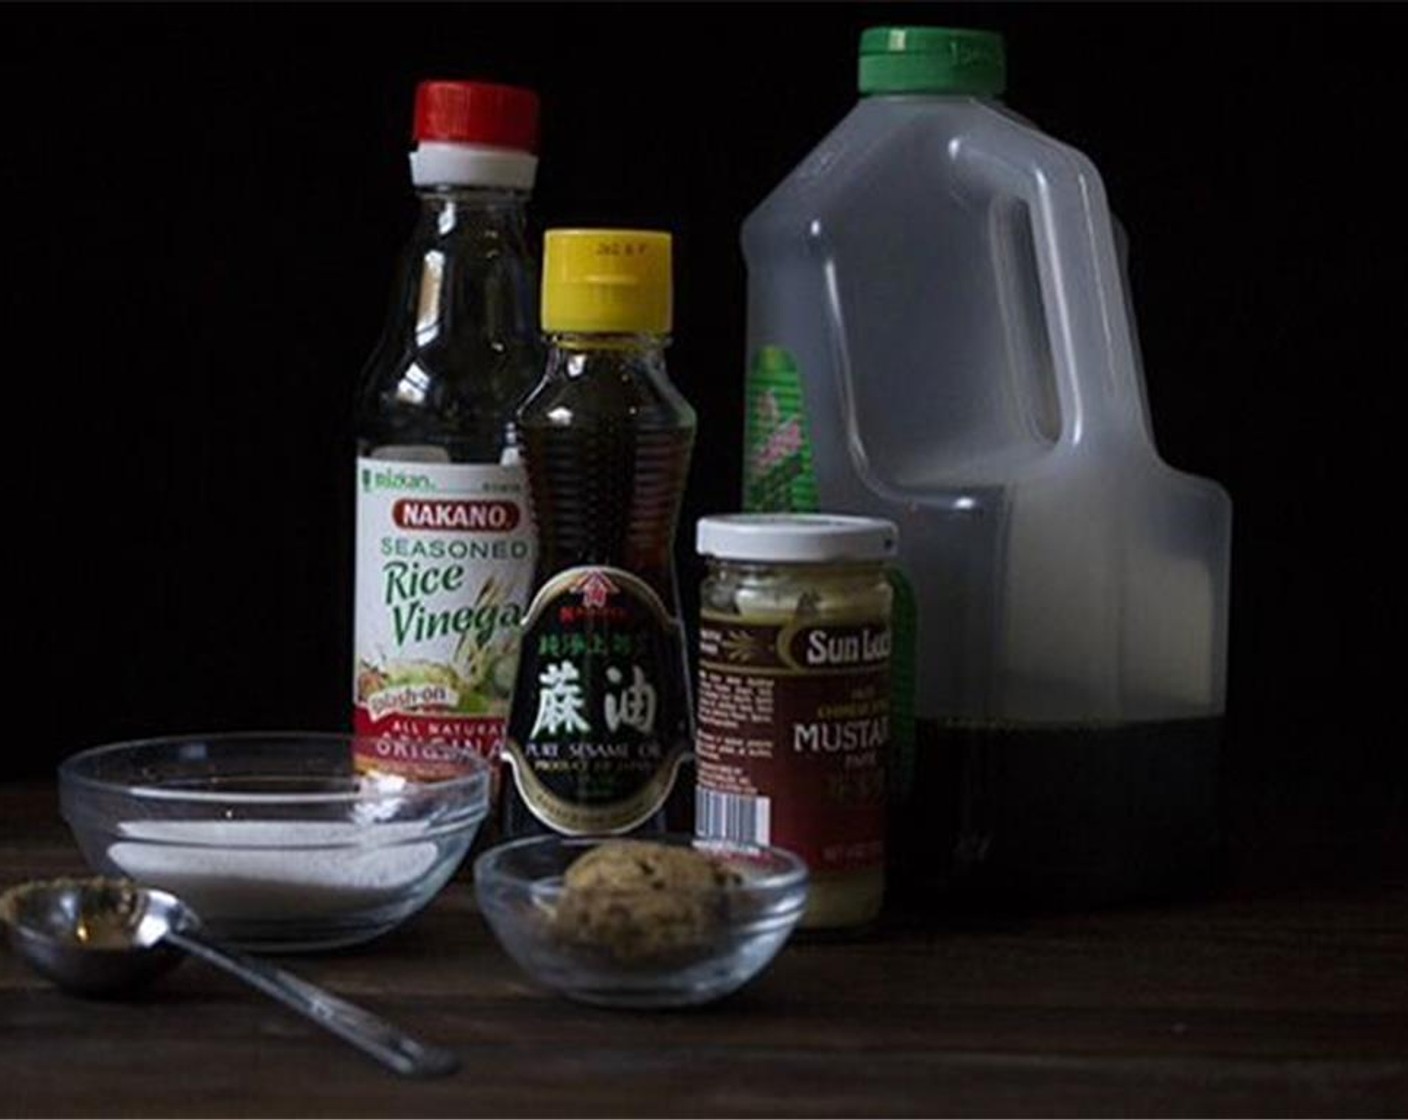 step 5 To prepare the stir-fry sauce, mix Low-Sodium Soy Sauce (1/4 cup), Rice Vinegar (2 Tbsp), Sesame Oil (1 Tbsp), Brown Sugar (3 Tbsp), Chinese Hot Mustard (1 Tbsp) and Corn Starch (1 tsp) in a medium bowl.